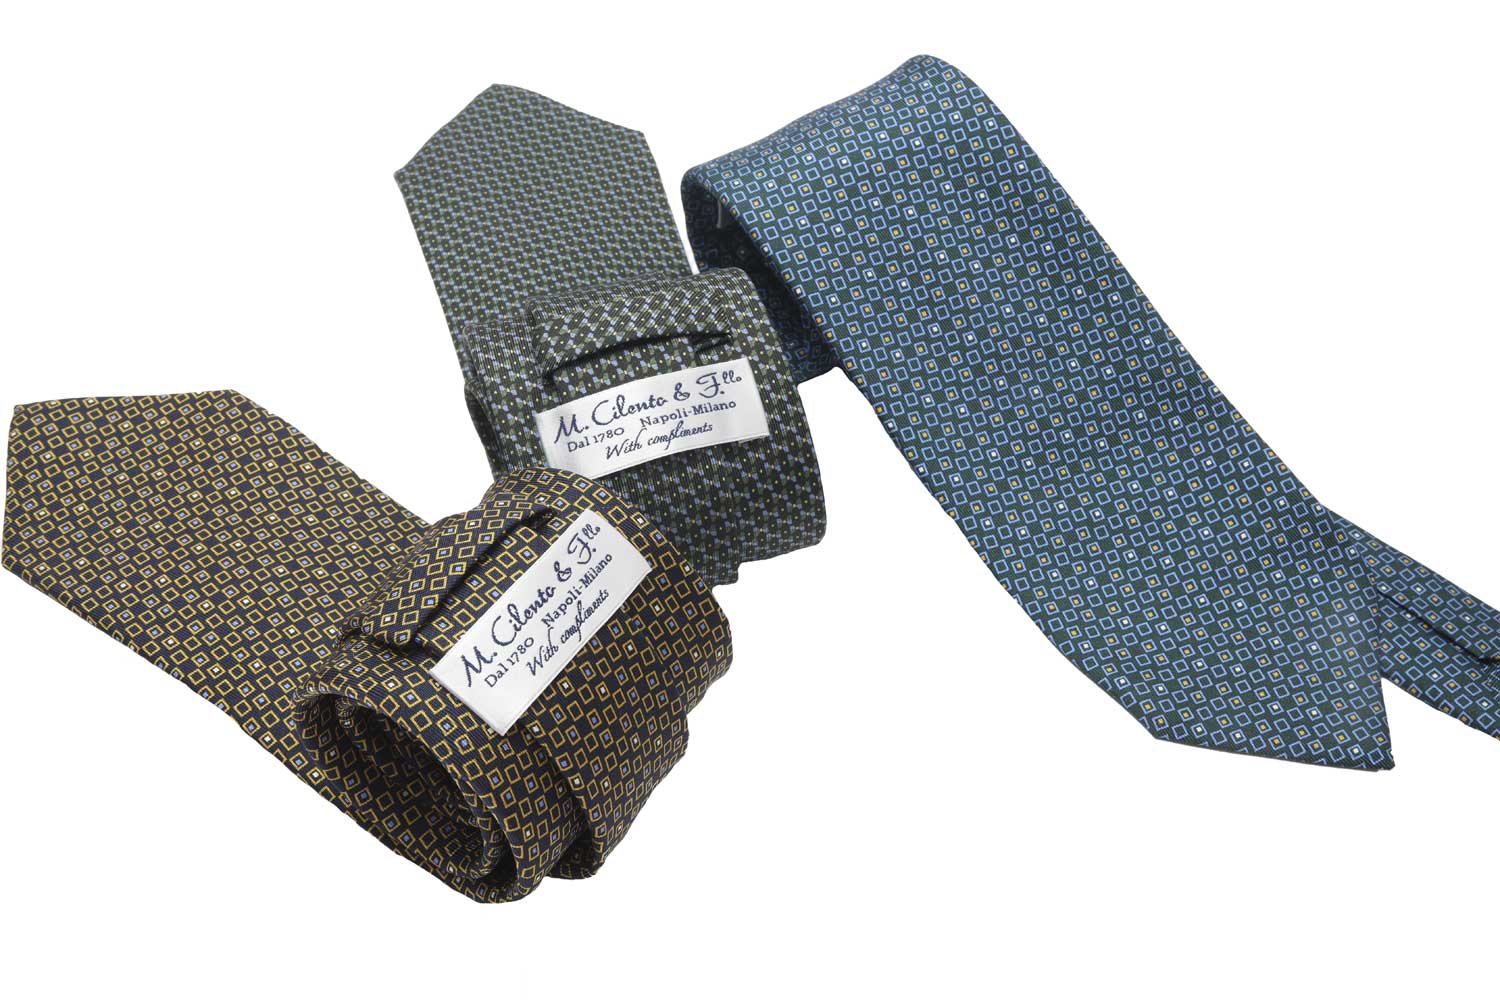 Cravatte seta e settepieghe